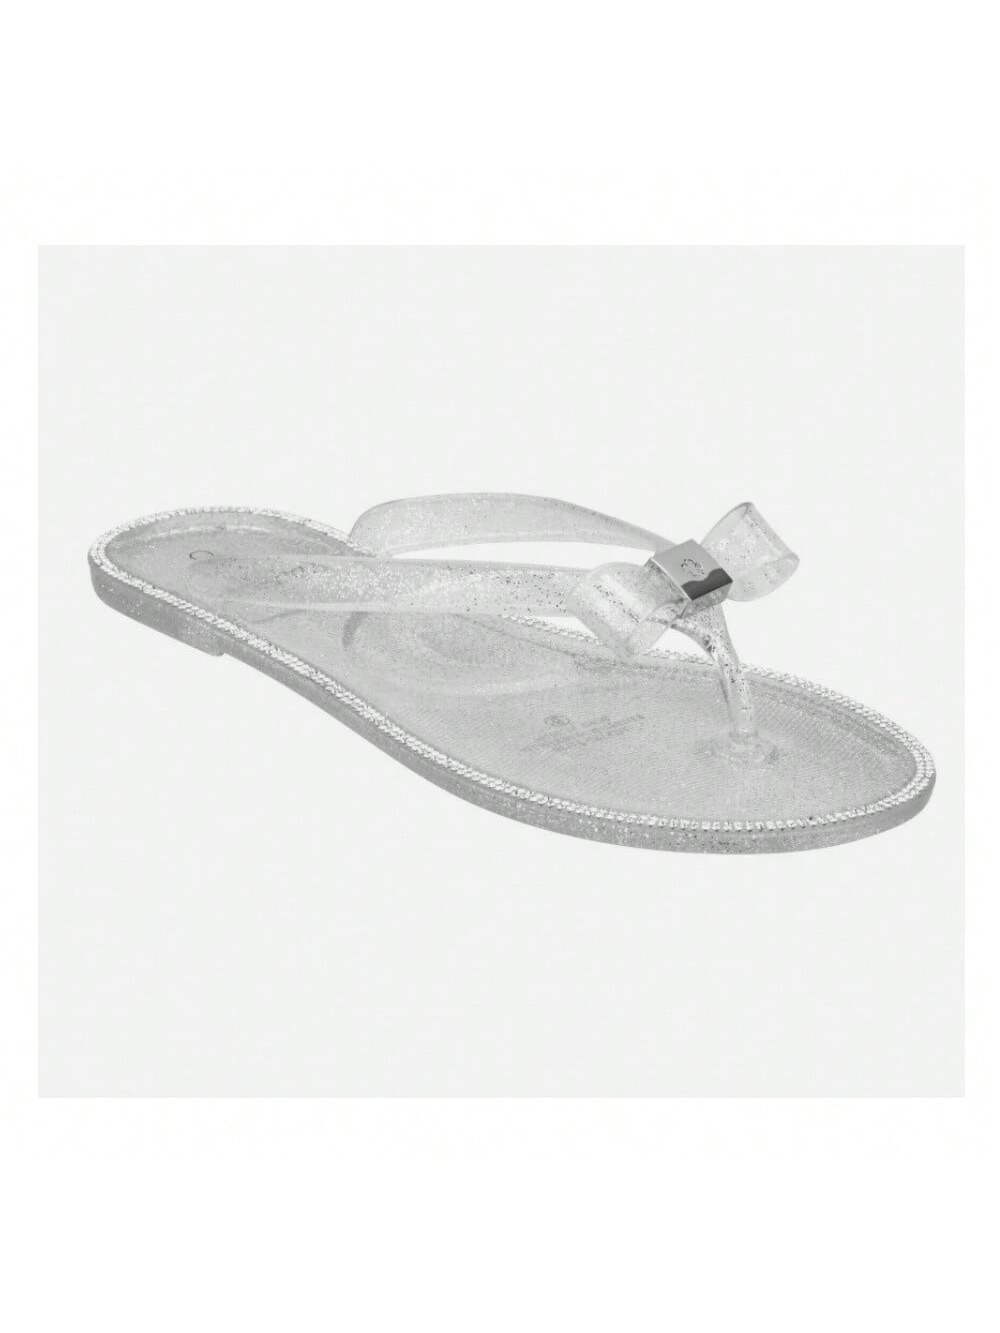 Women's Jelly Sandals Rhinestone Flip Flops Slide Flat Sandals-Sliver glitter-1